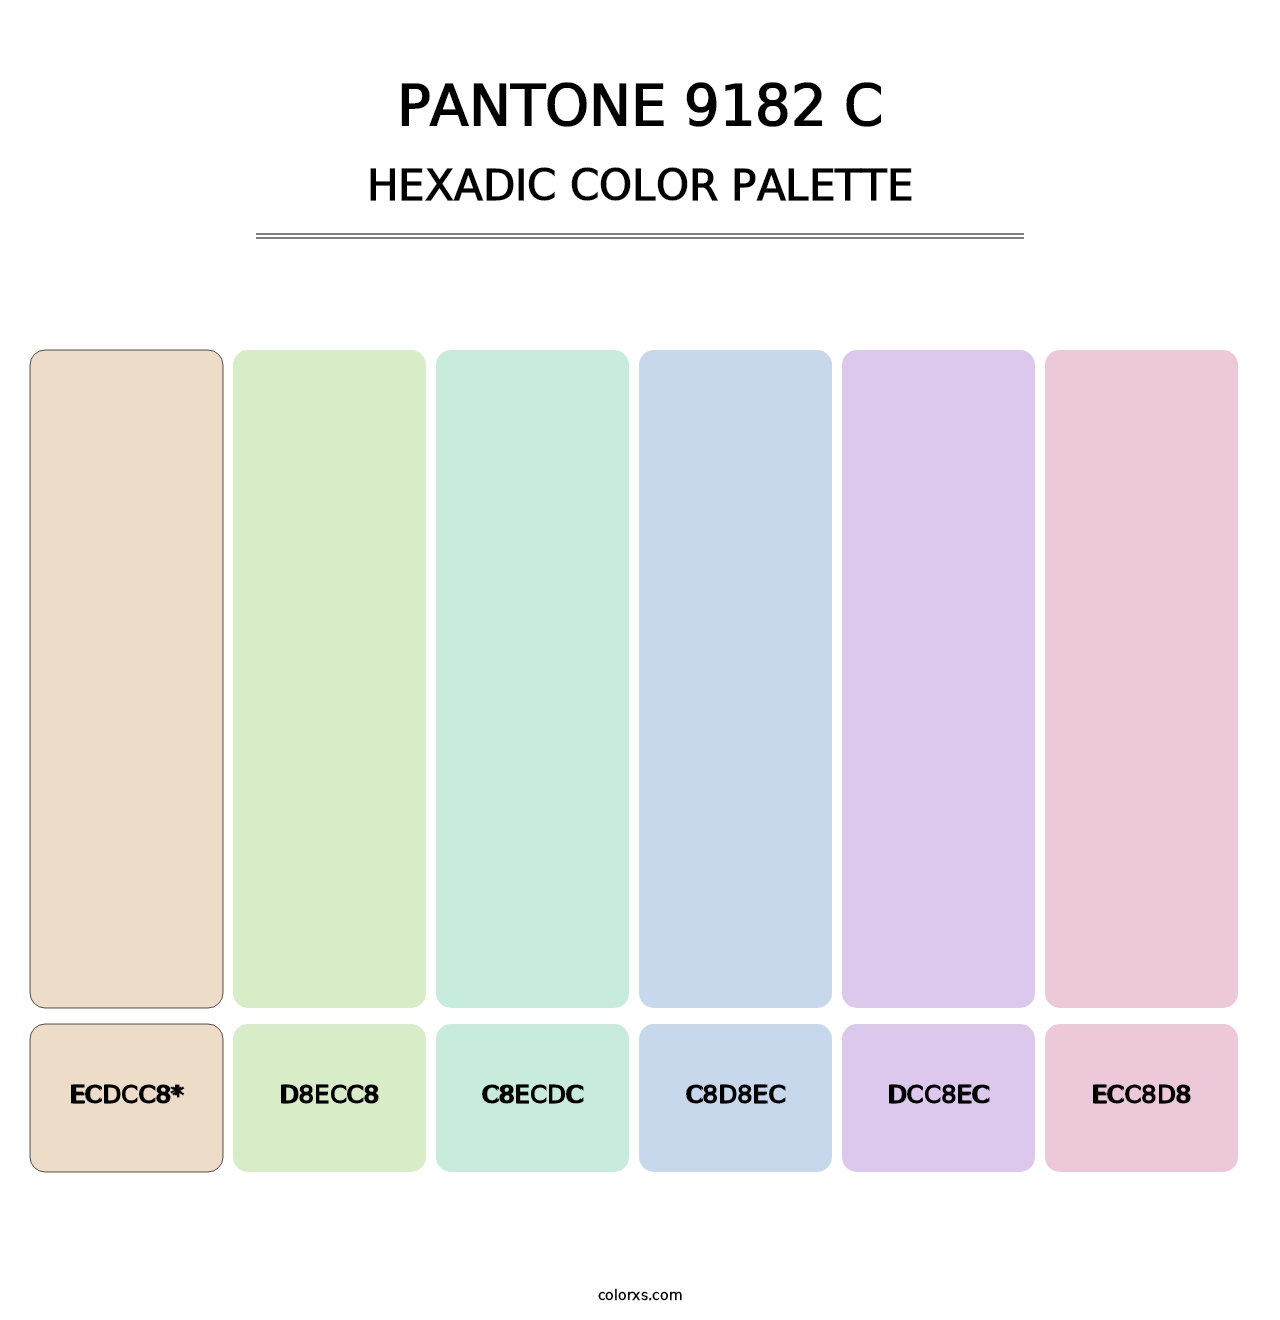 PANTONE 9182 C - Hexadic Color Palette